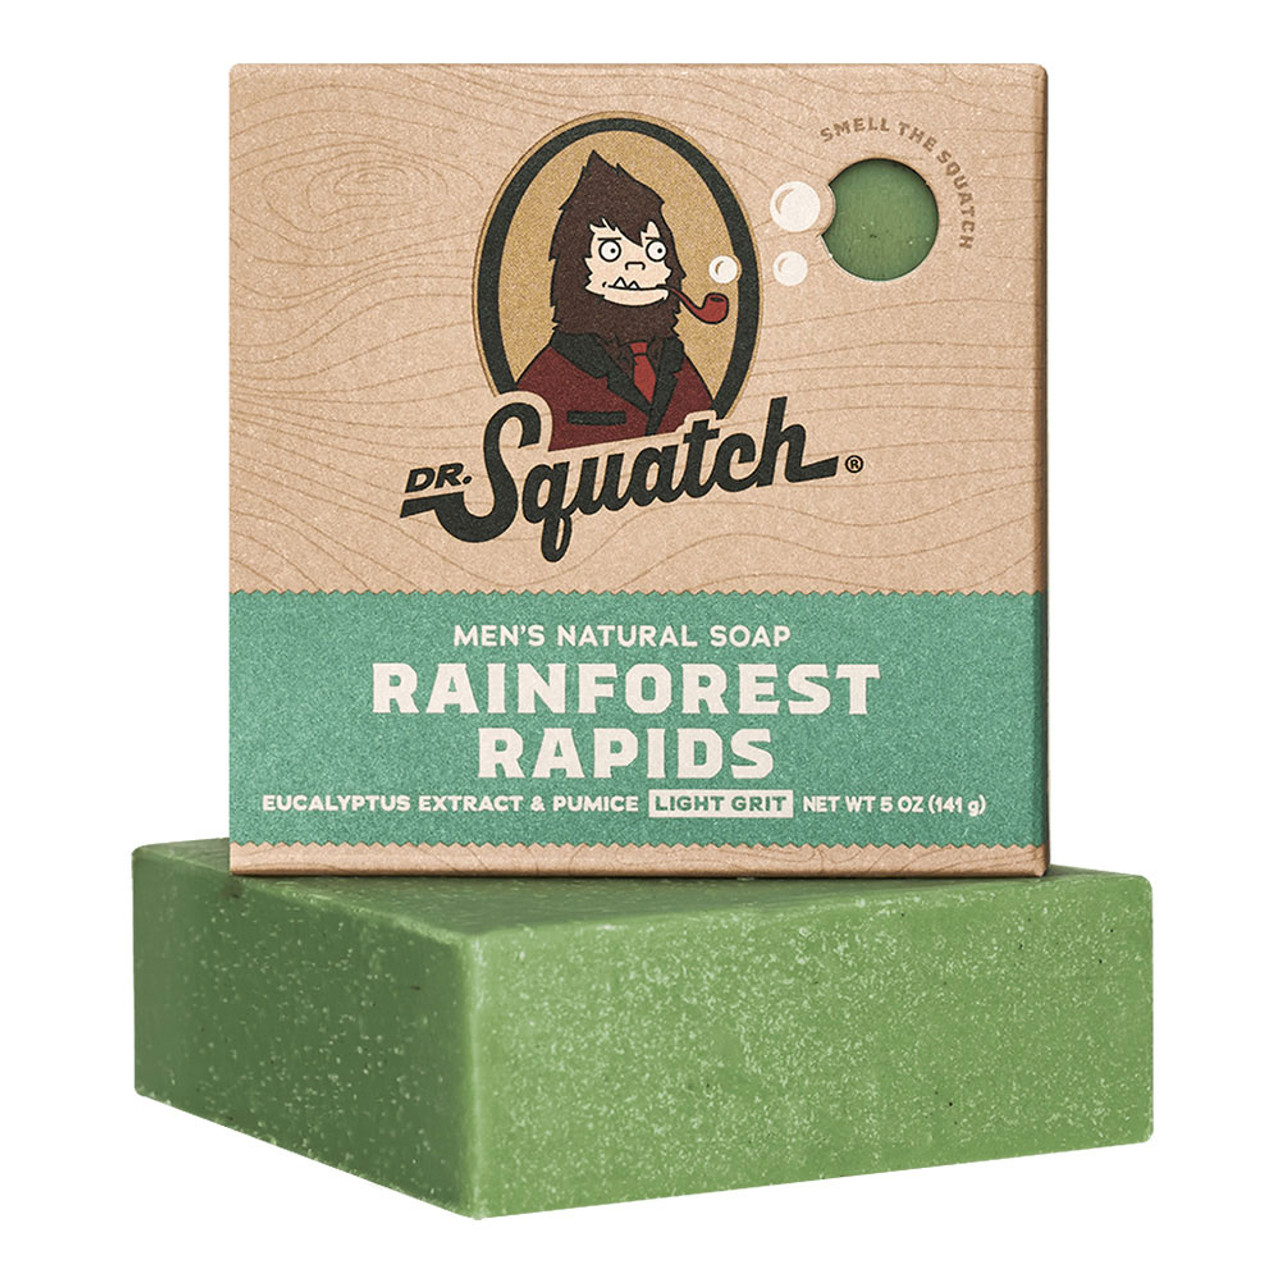 https://cdn11.bigcommerce.com/s-zut1msomd6/images/stencil/1280x1280/products/41466/244416/dr-squatch-bar-soap-wh-bar-rar-01-rainfrst-rainforest-rapids-main__51074.1701886910.jpg?c=1